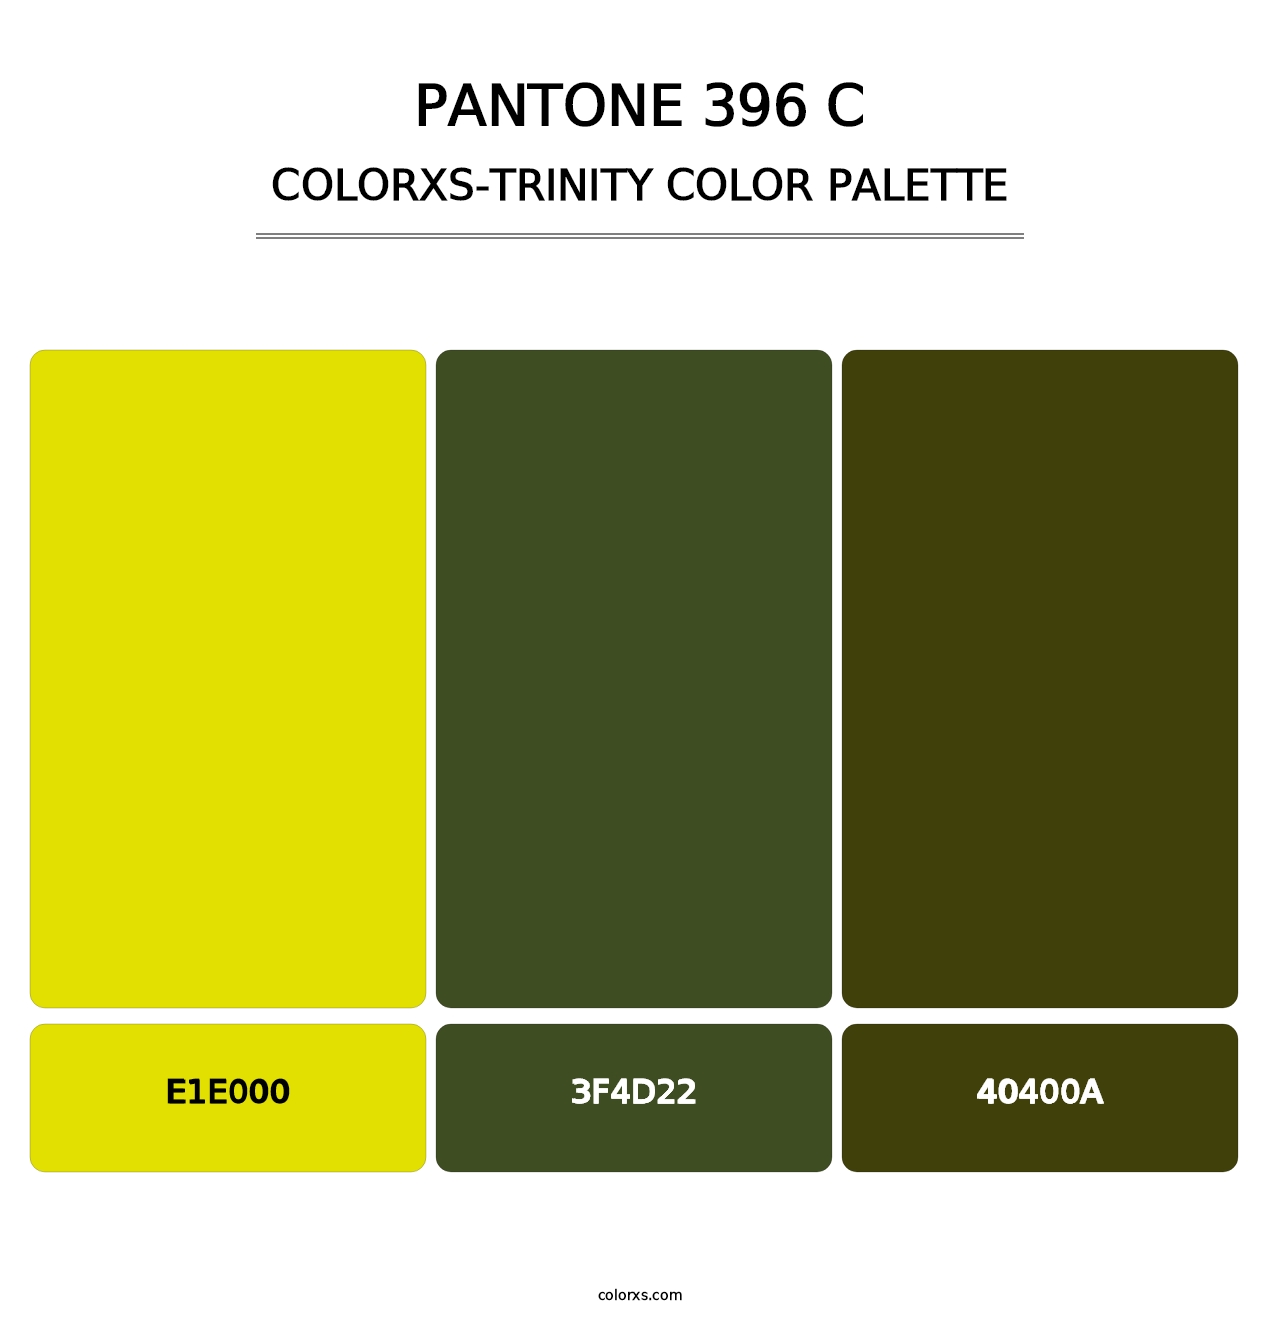 PANTONE 396 C - Colorxs Trinity Palette